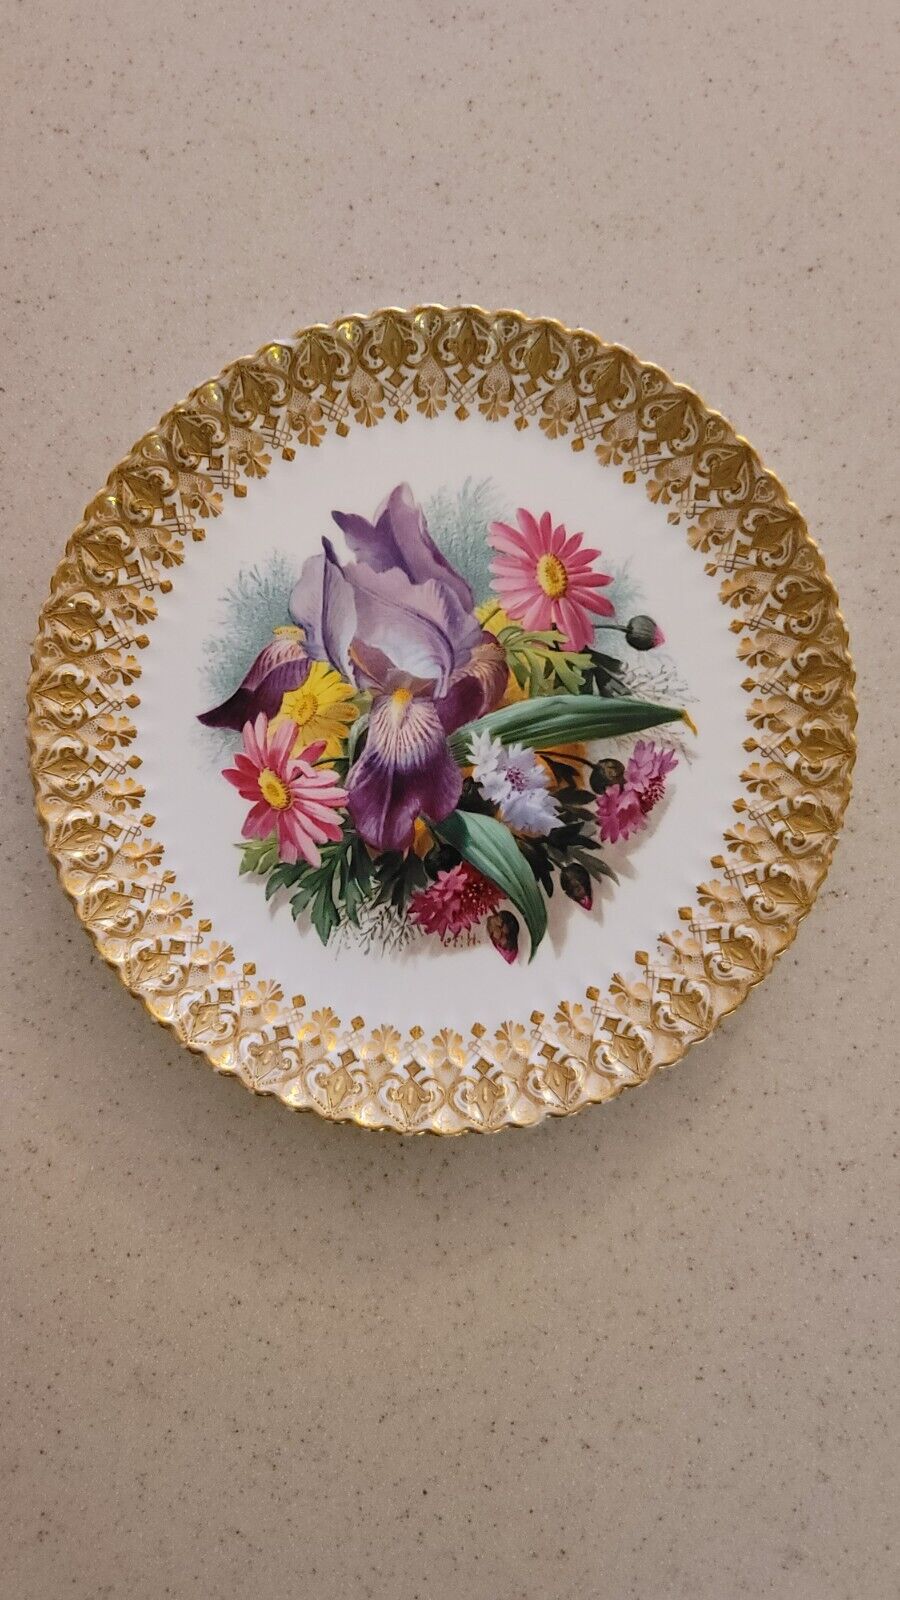 Exceedingly Rare 19th Century C F Hurten Copeland Spode handpainted Plate